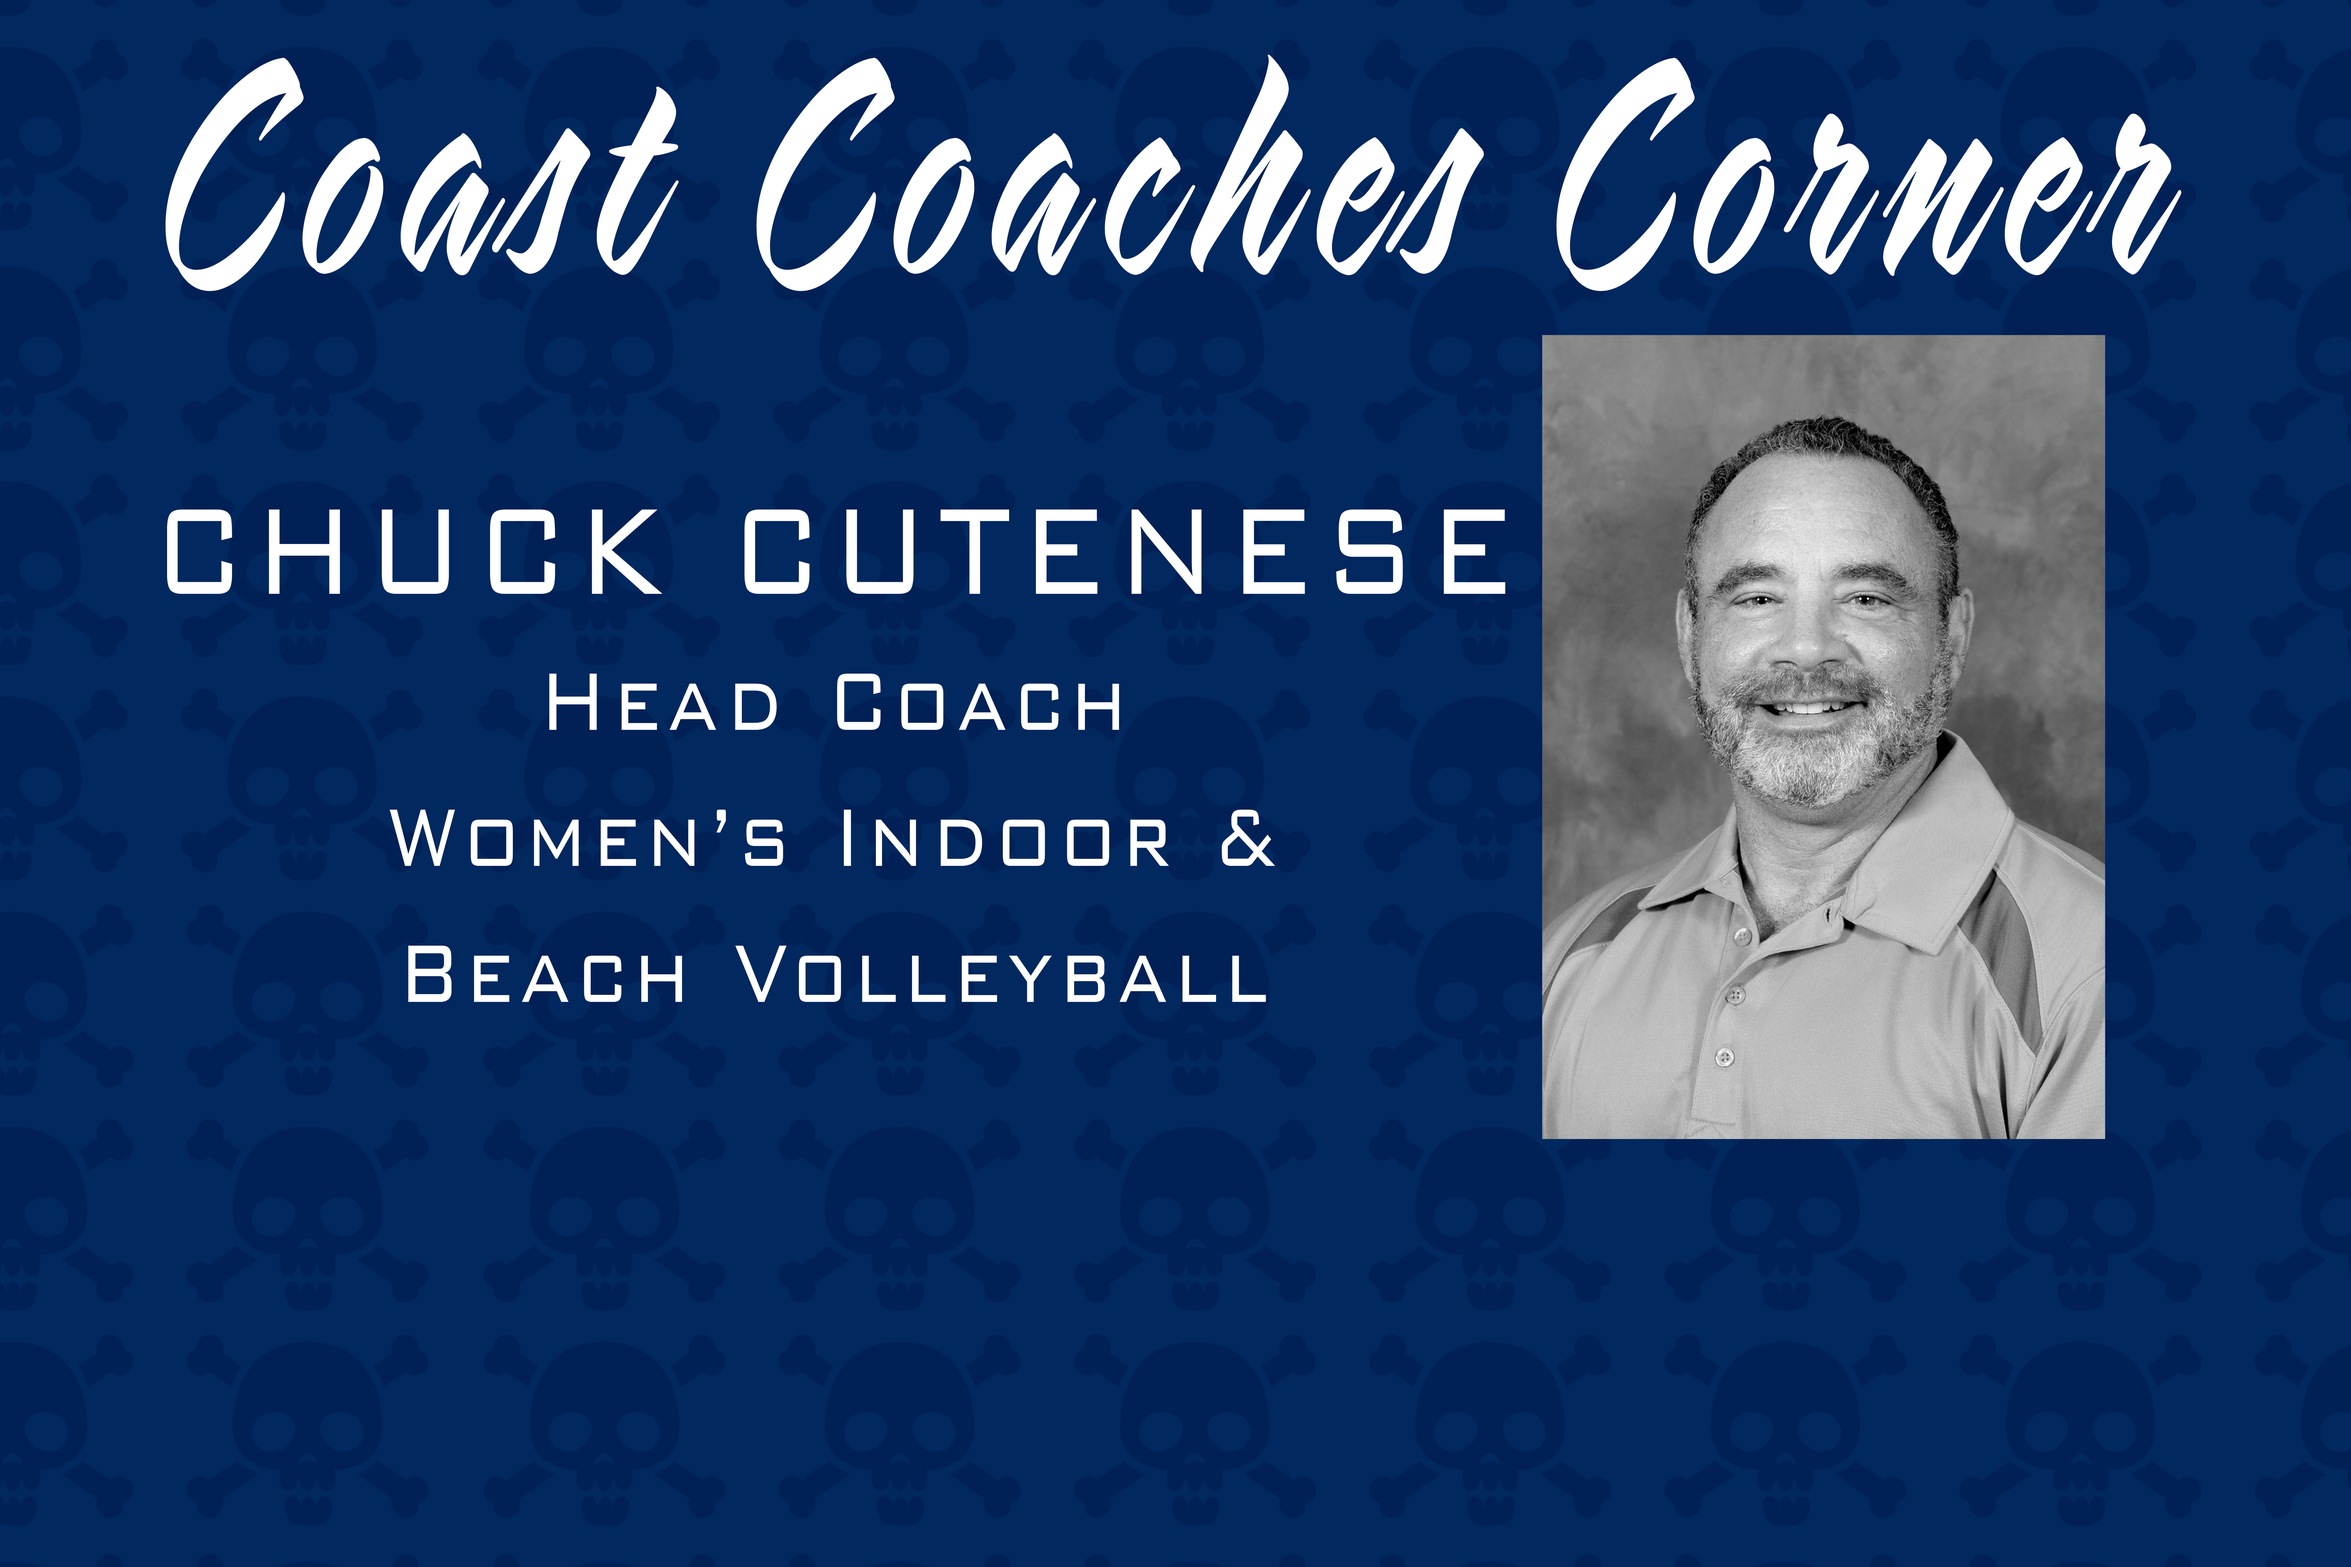 Coast Coaches Corner -- Chuck Cutenese